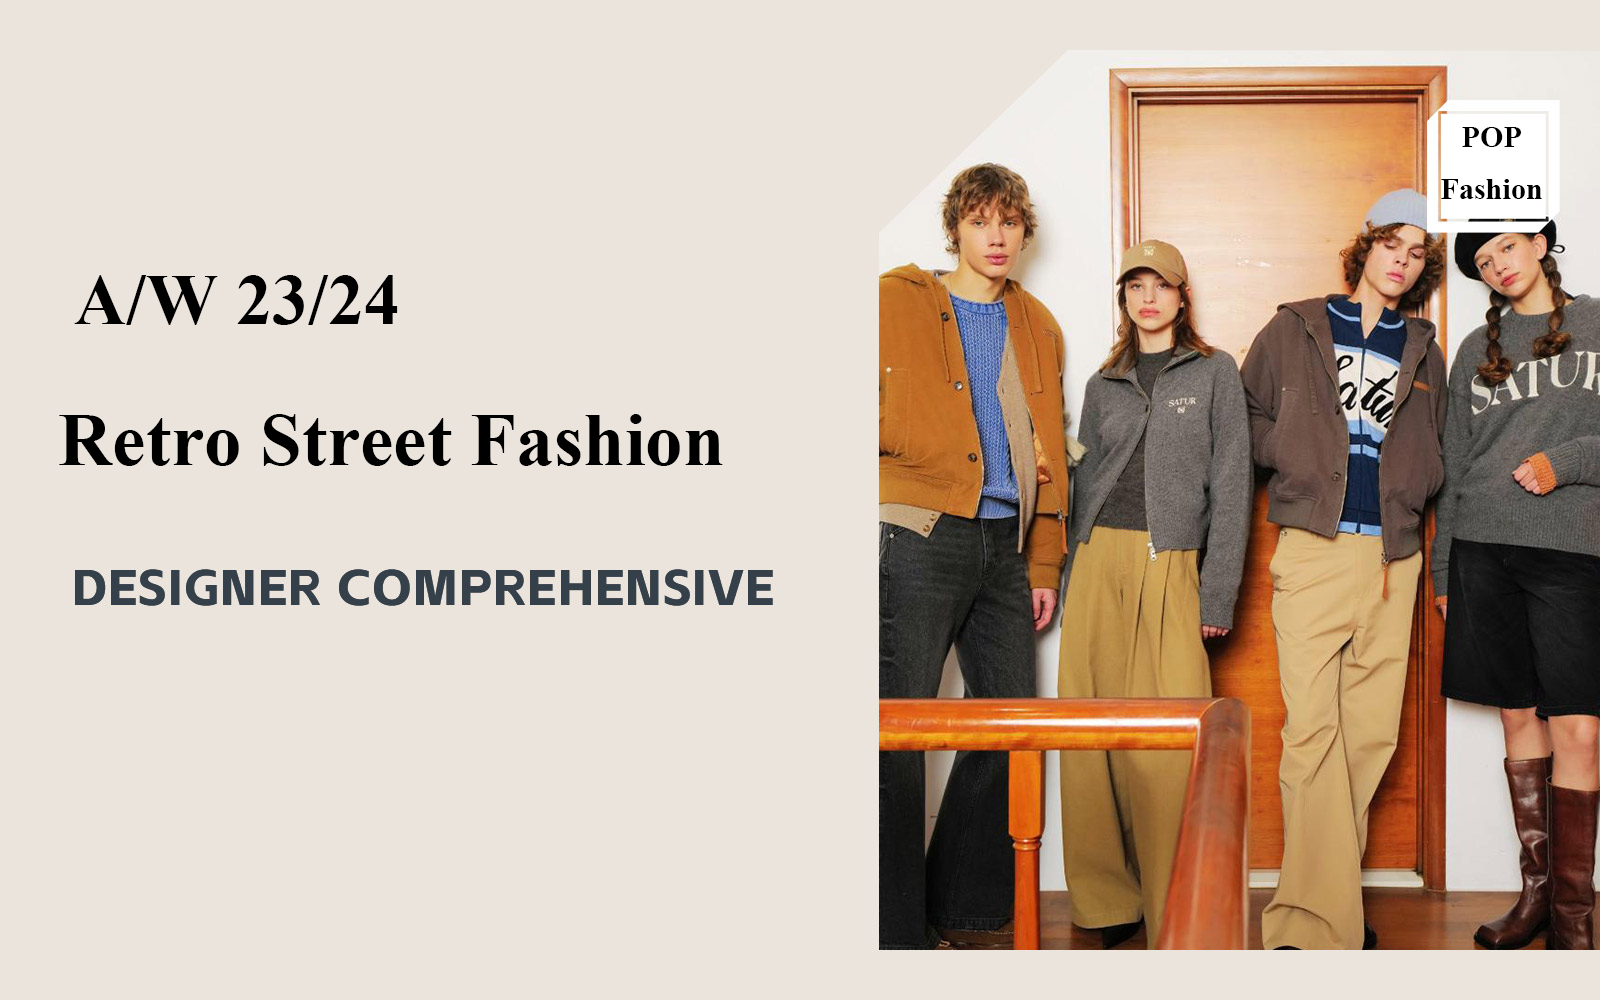 Retro Street Fashion -- The Comprehensive Analysis of Designer Brand